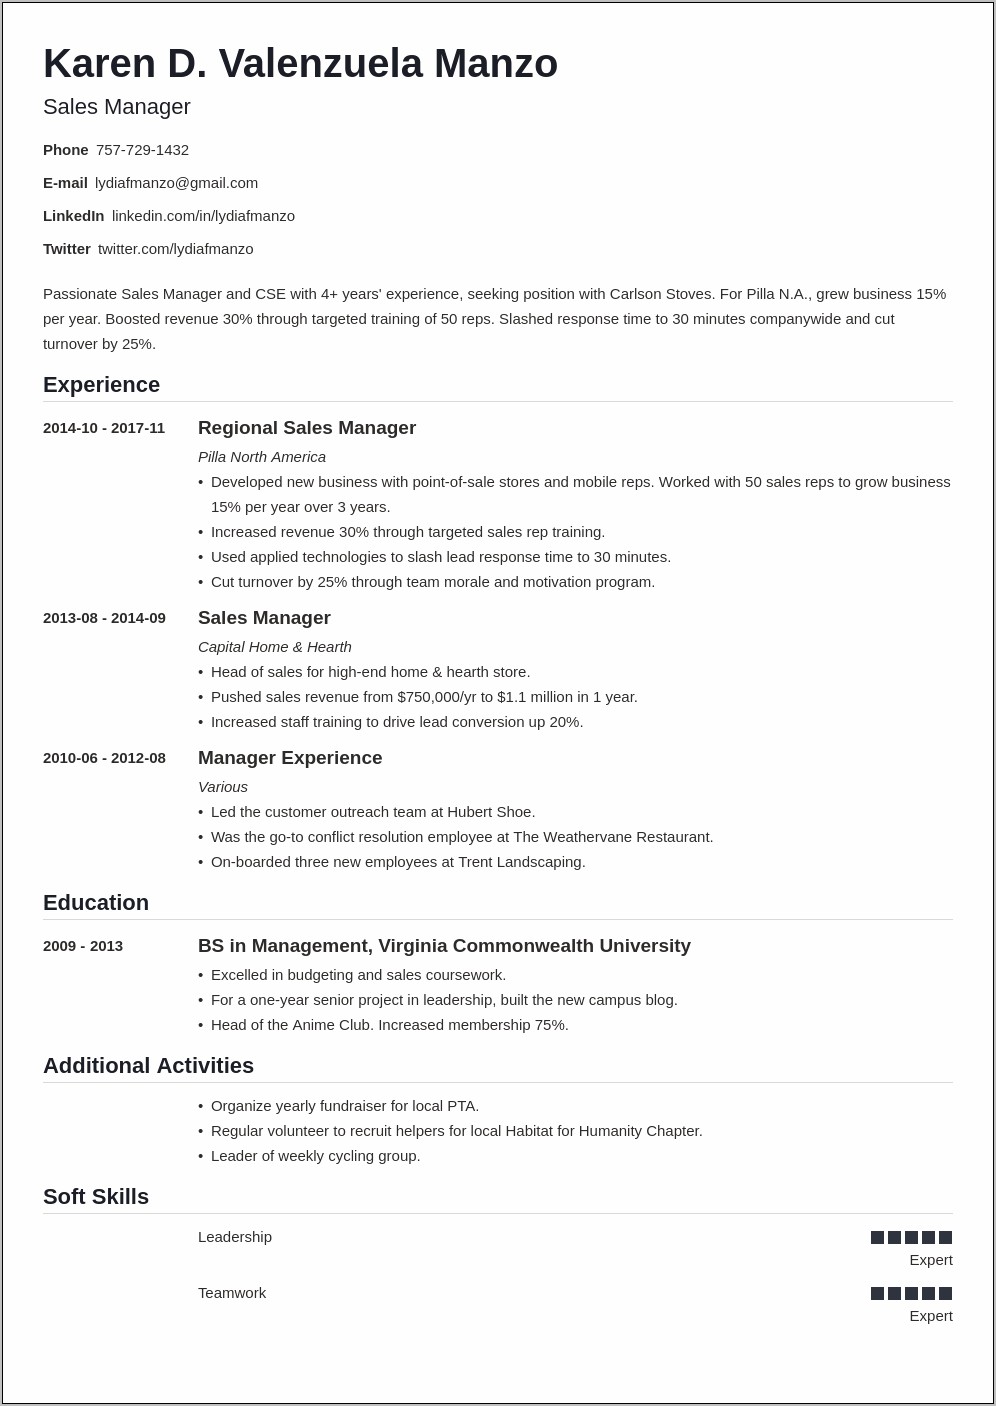 Administration Officer Job Description Resume